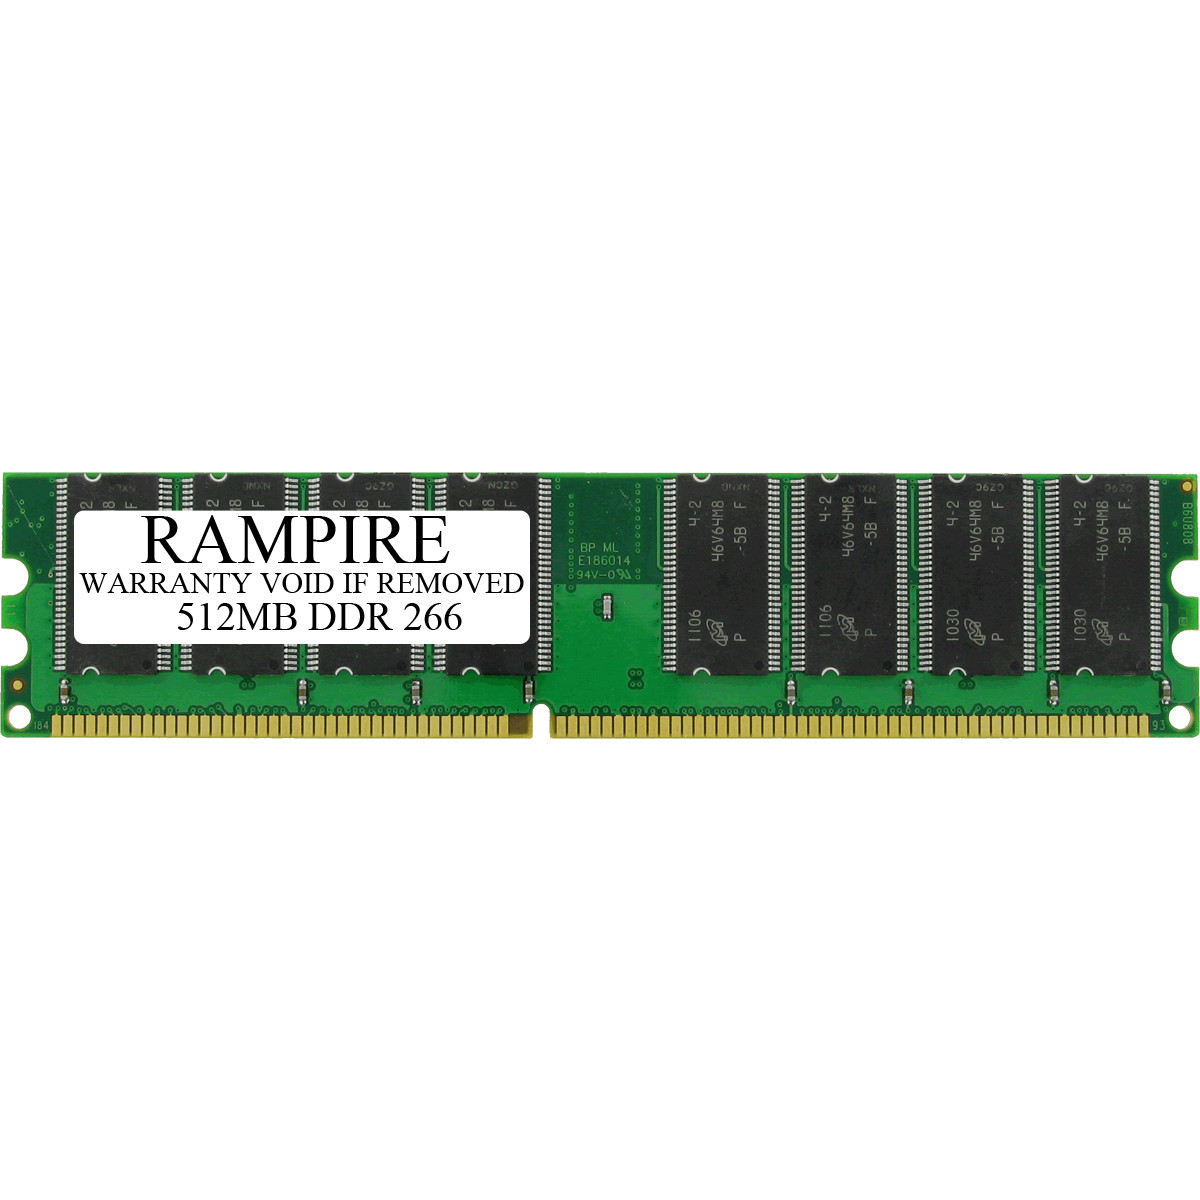 RAMPIRE 512MB DDR 266 (PC 2100) 184-Pin DDR SDRAM 2.5V 2Rx8 Non-ECC UDIMM Memory for Desktop PC